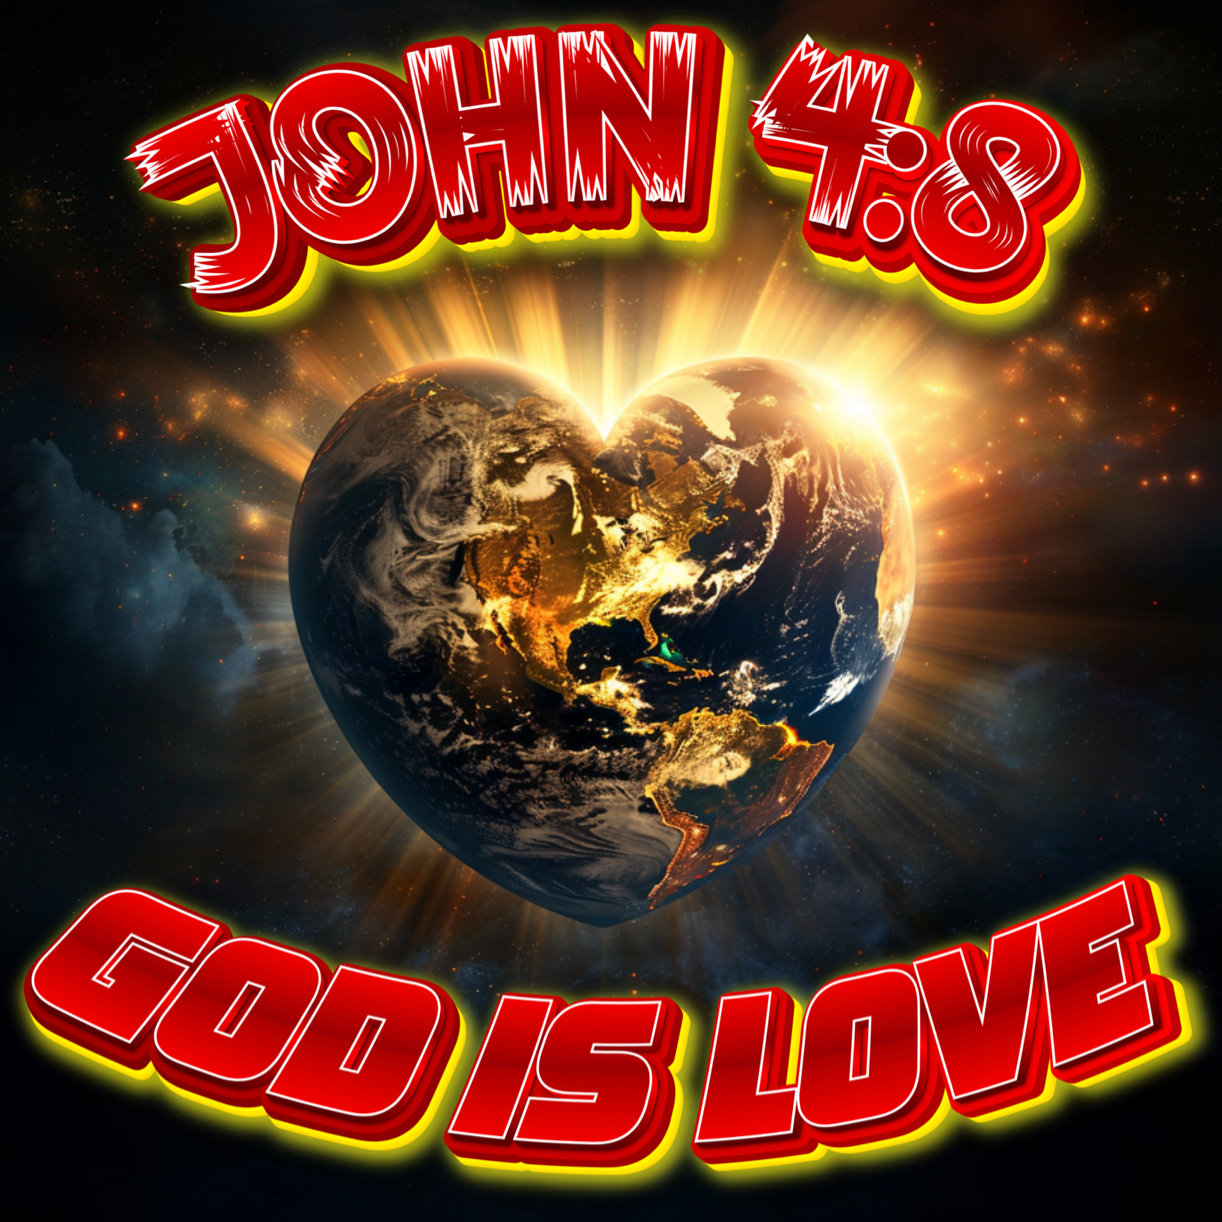 John 4:8 Bible Verse - God is Love